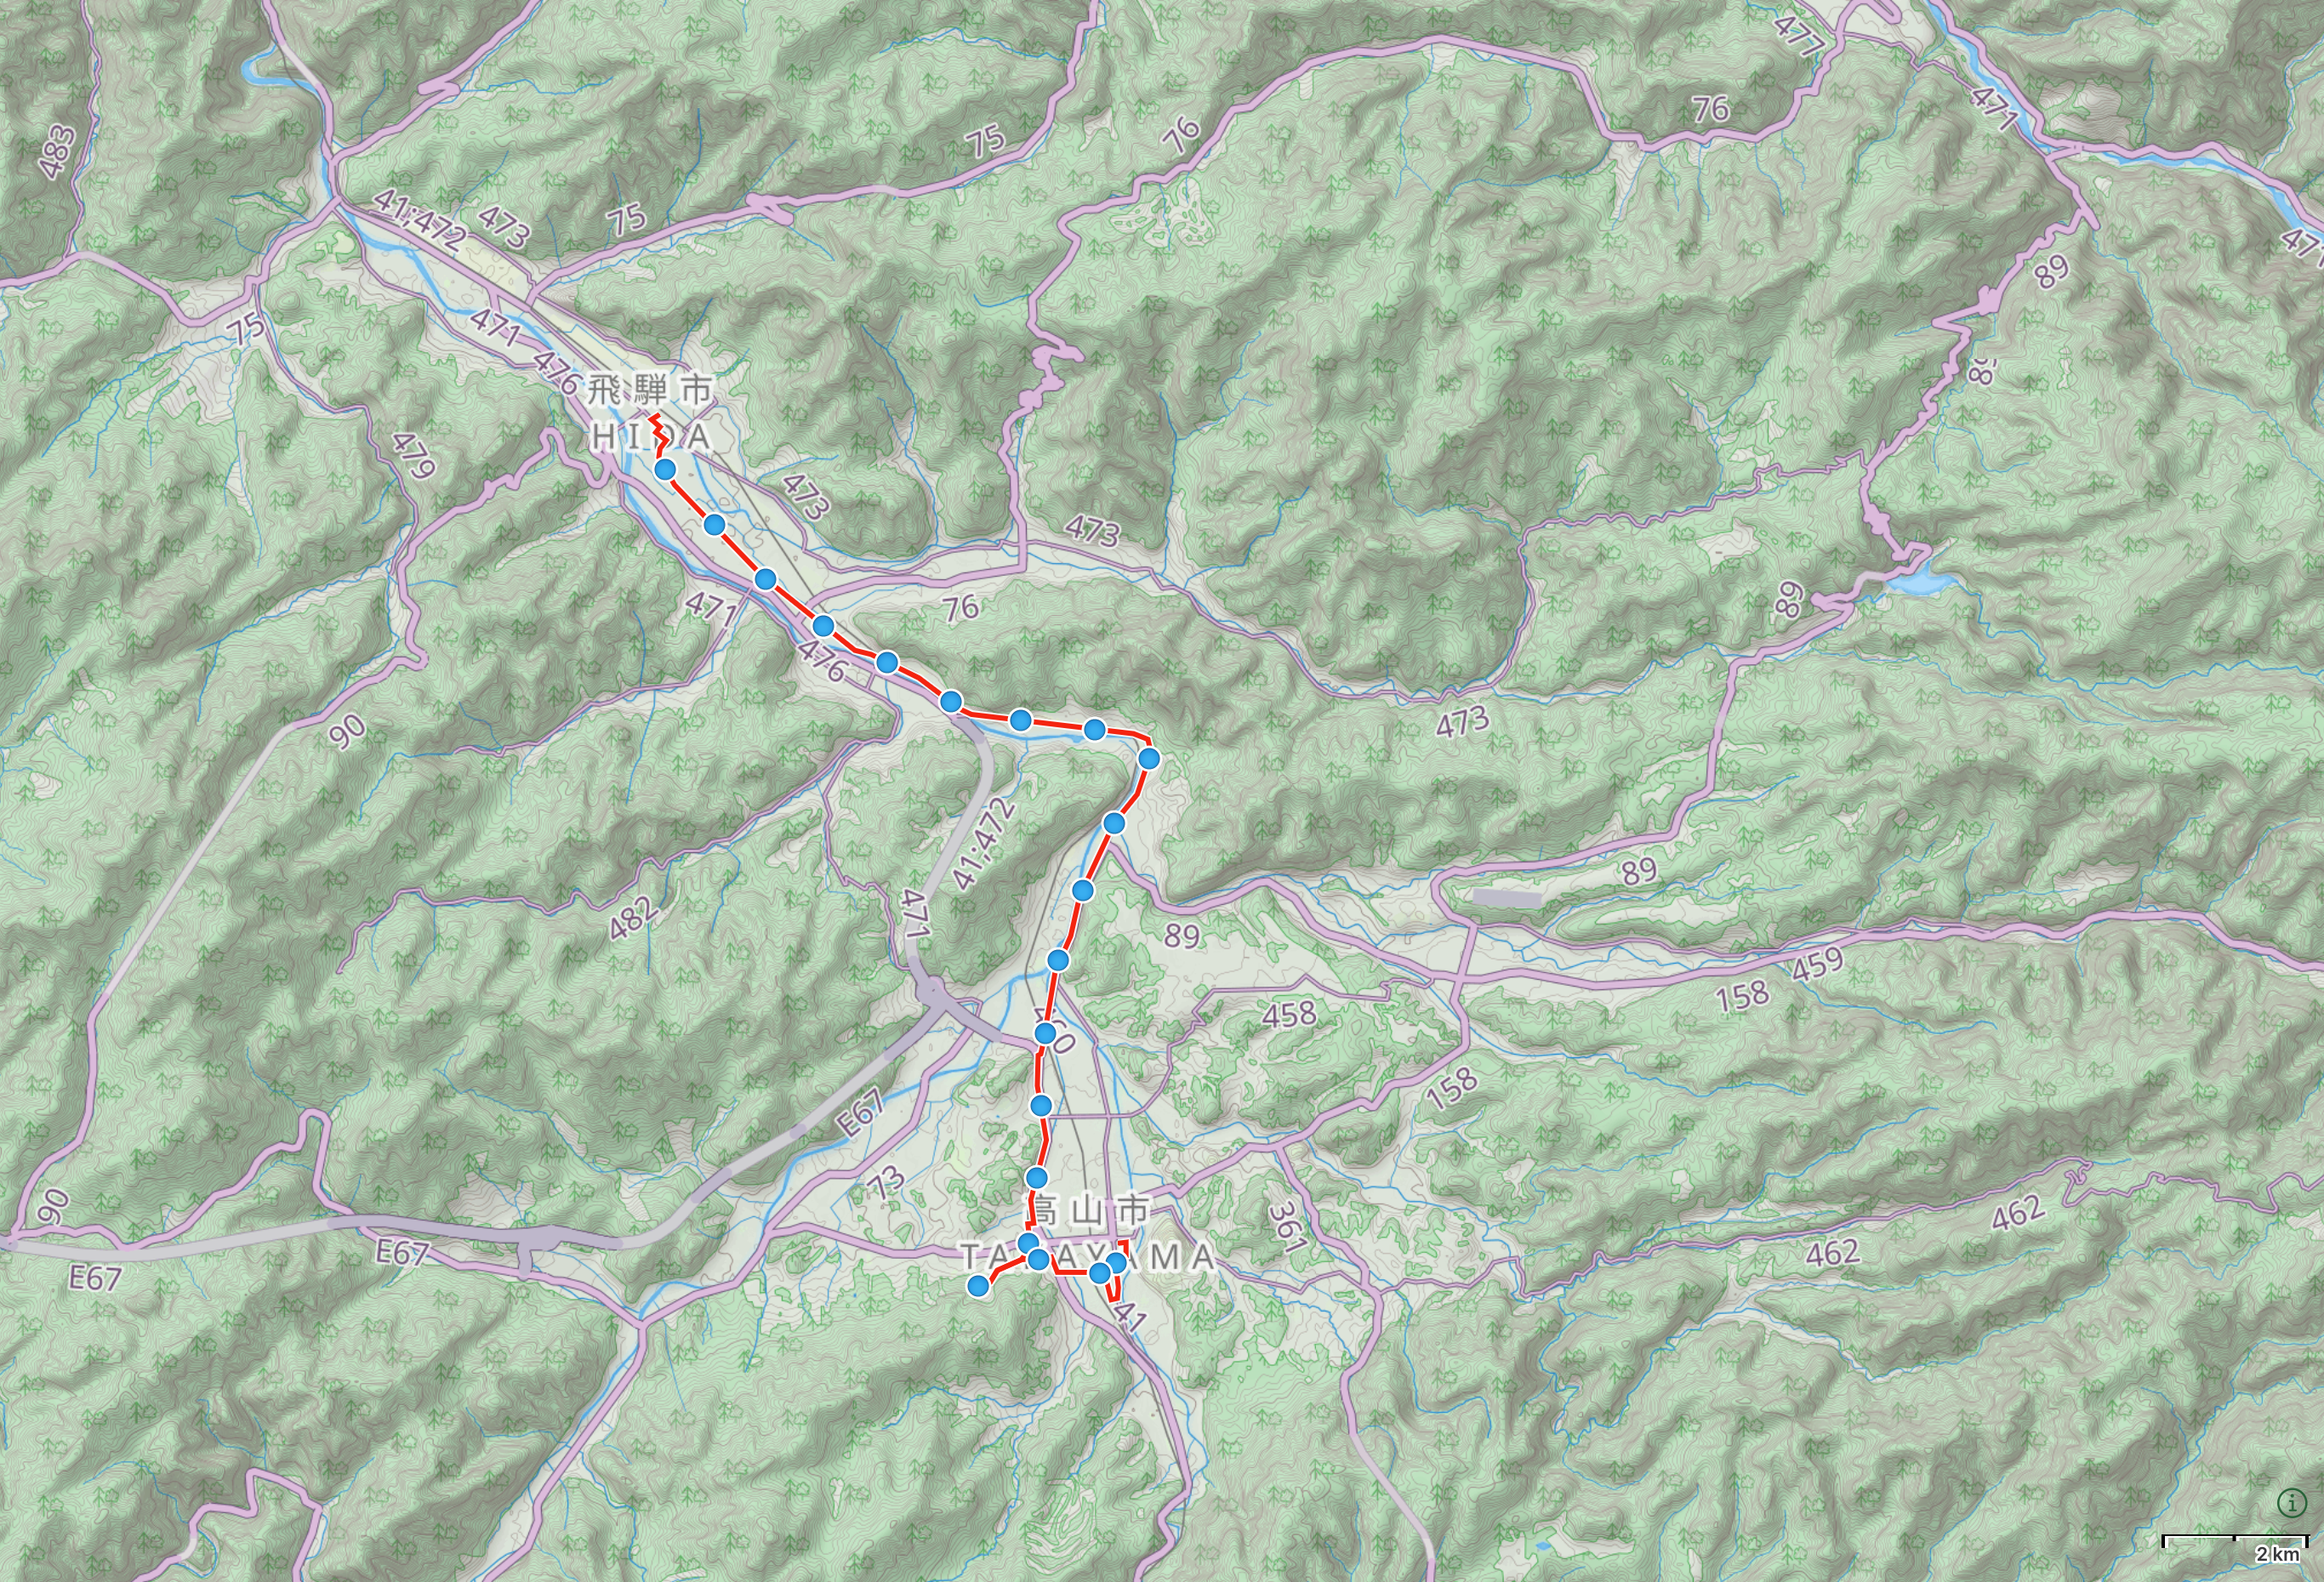 Map of Gifu Prefecture with author’s route from Hida Furukawa to Hida Takayama highlighted.